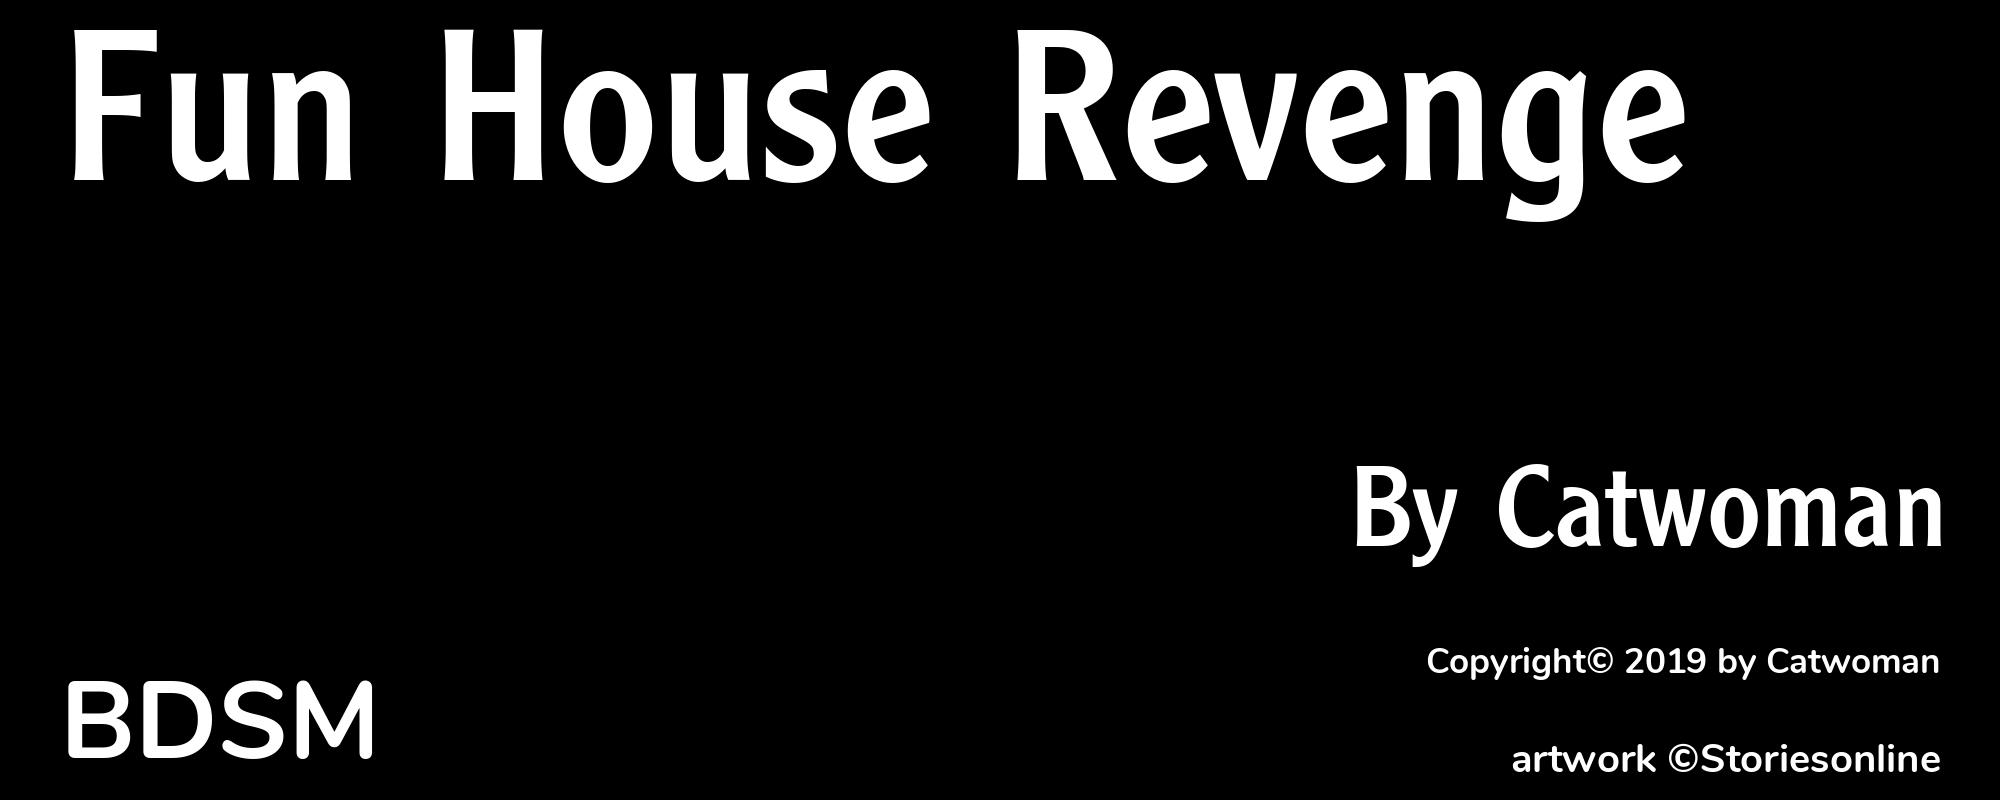 Fun House Revenge - Cover